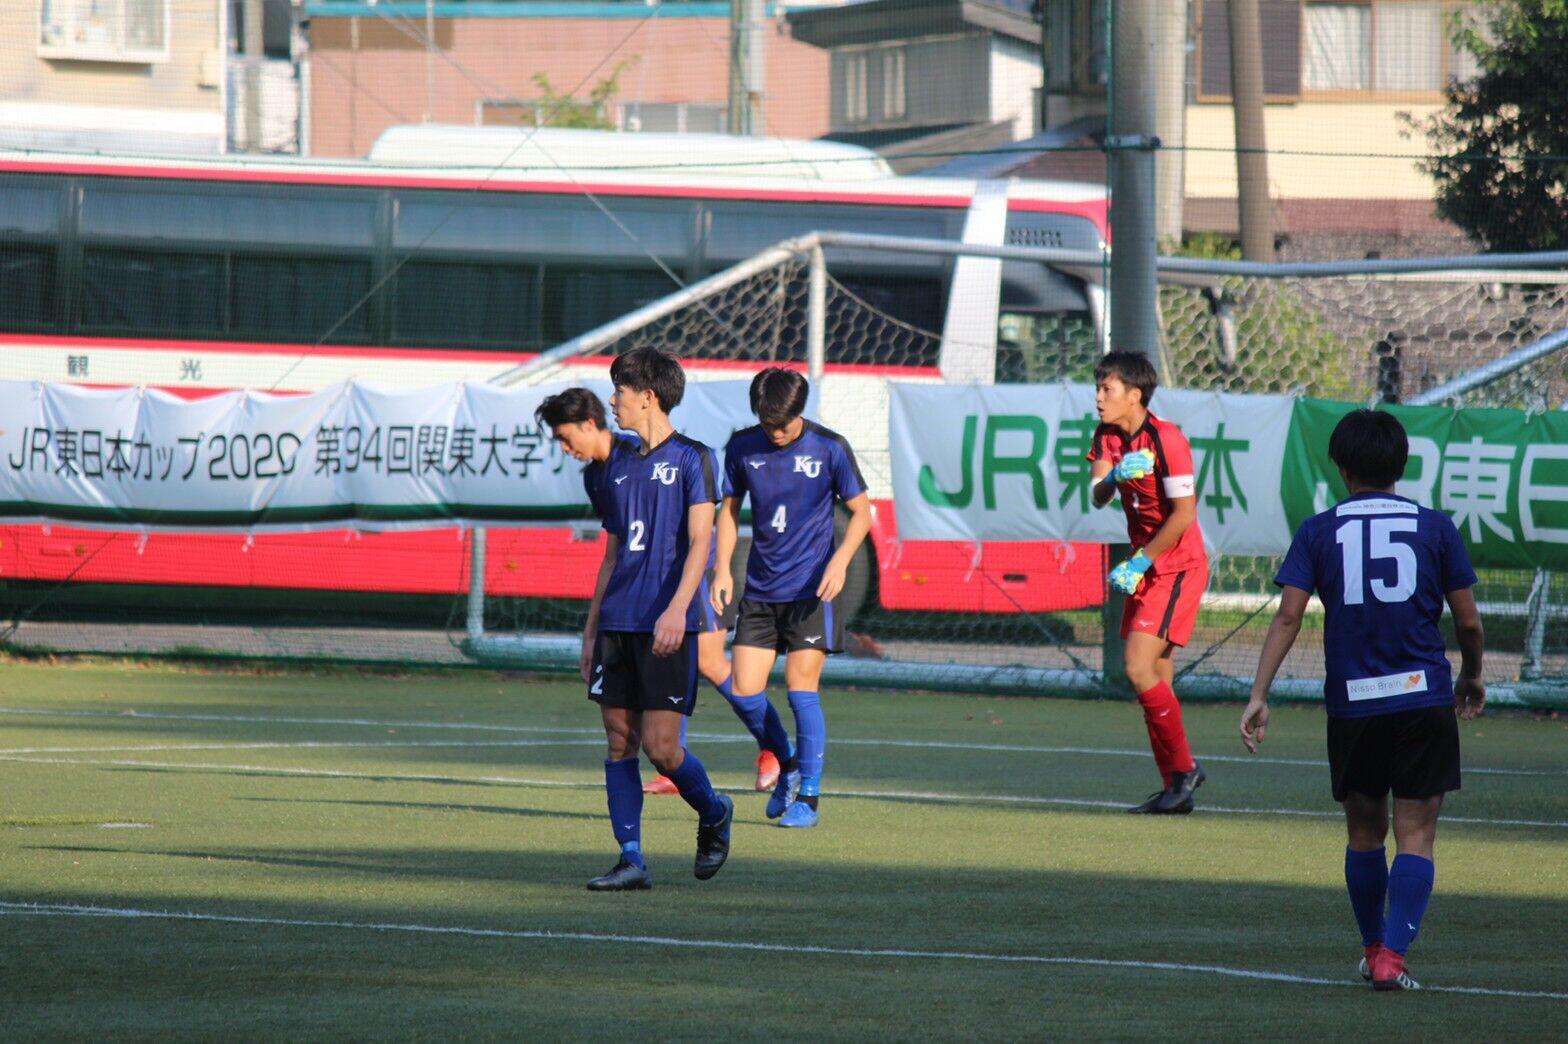 https://football.ku-sports.jp/blog/photoreport/images/4b0c463b2860cdb5ebe59849b749388e8e930da0.jpg